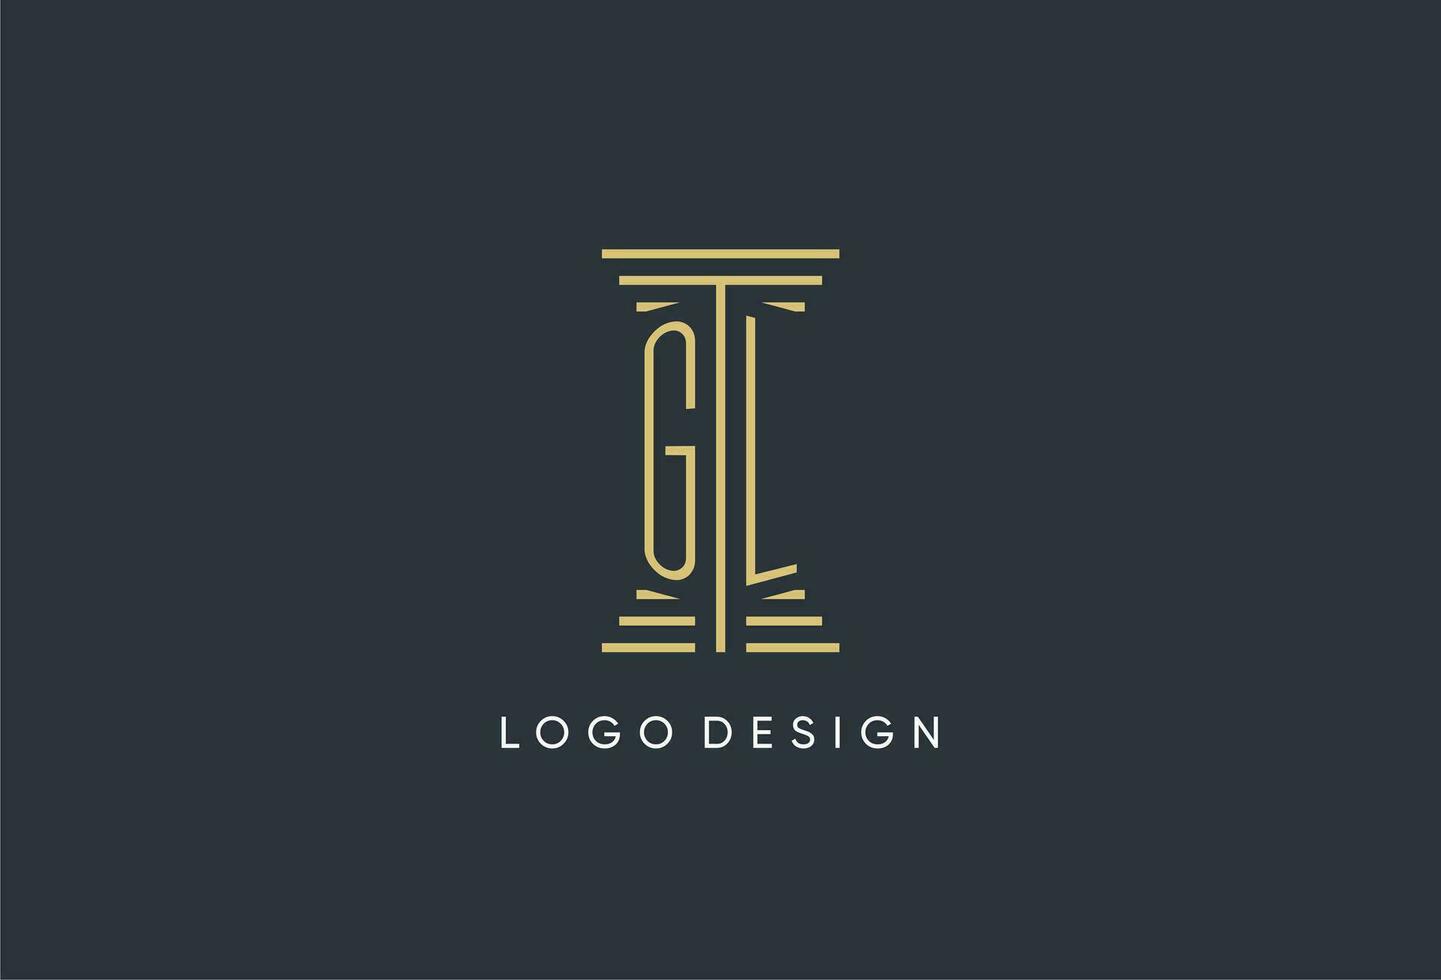 GL initial monogram with pillar shape logo design vector